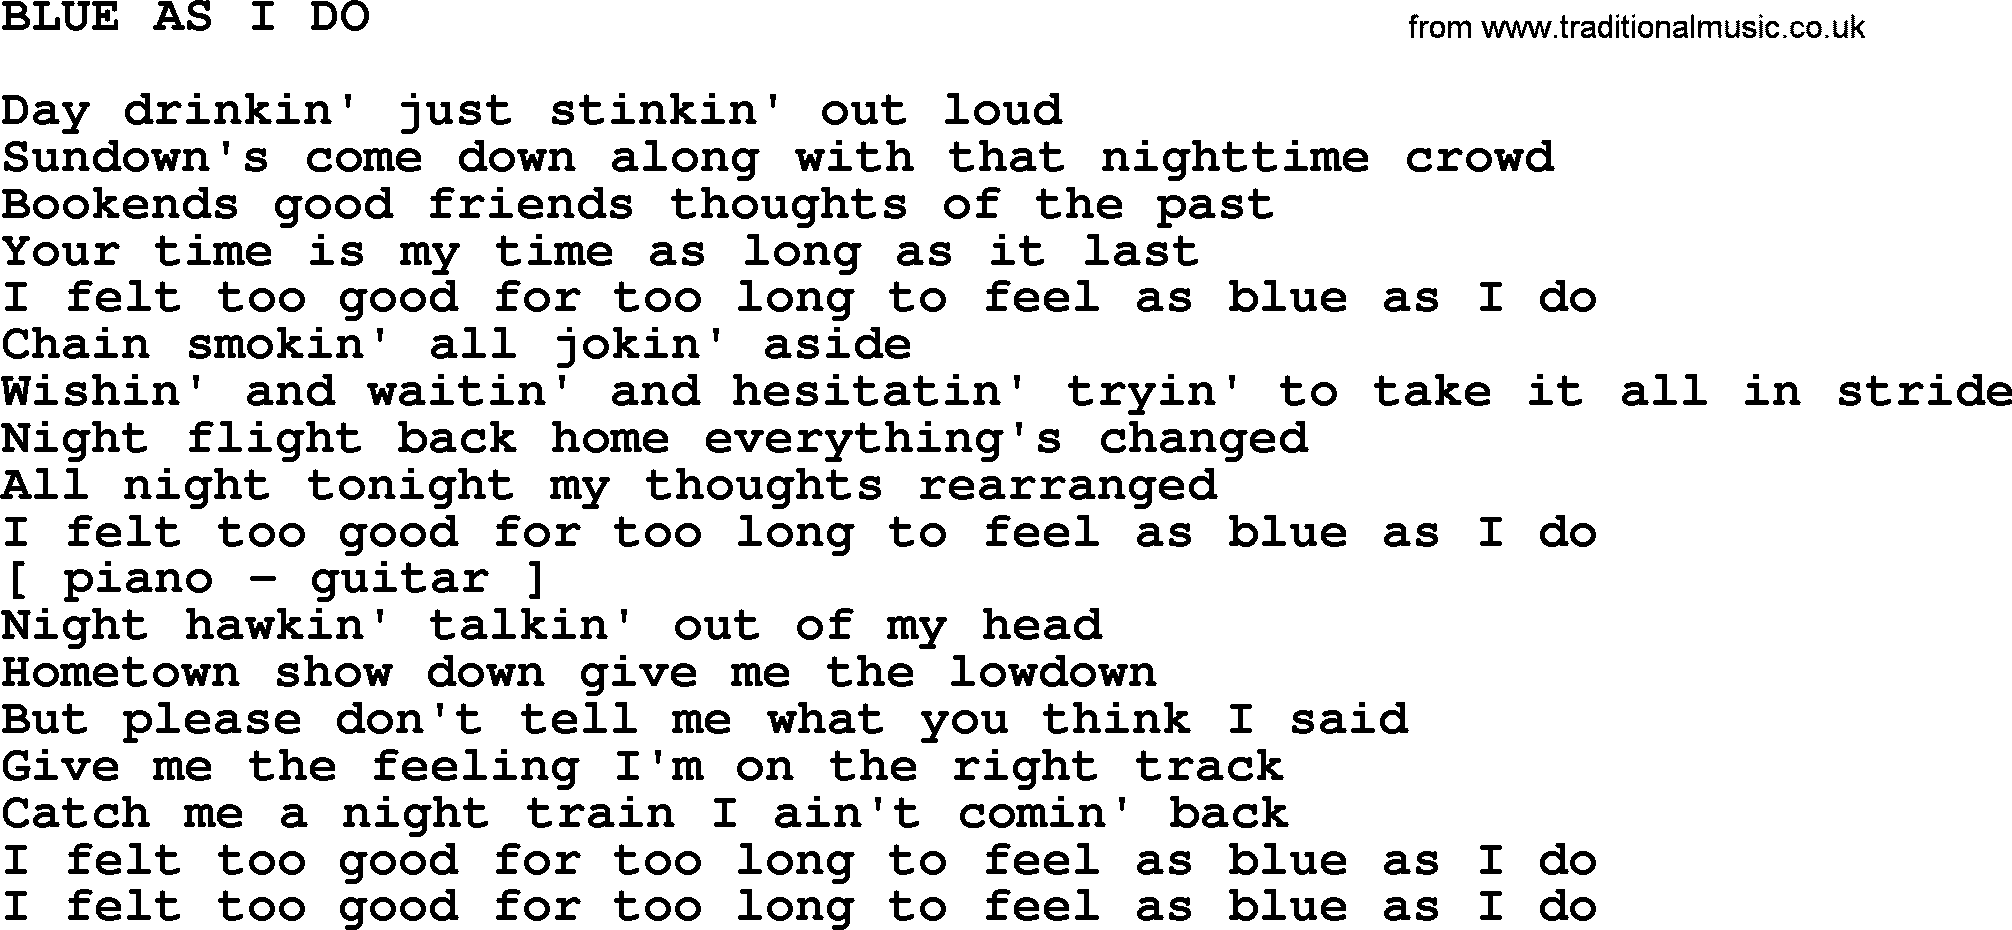 Kris Kristofferson song: Blue As I Do lyrics